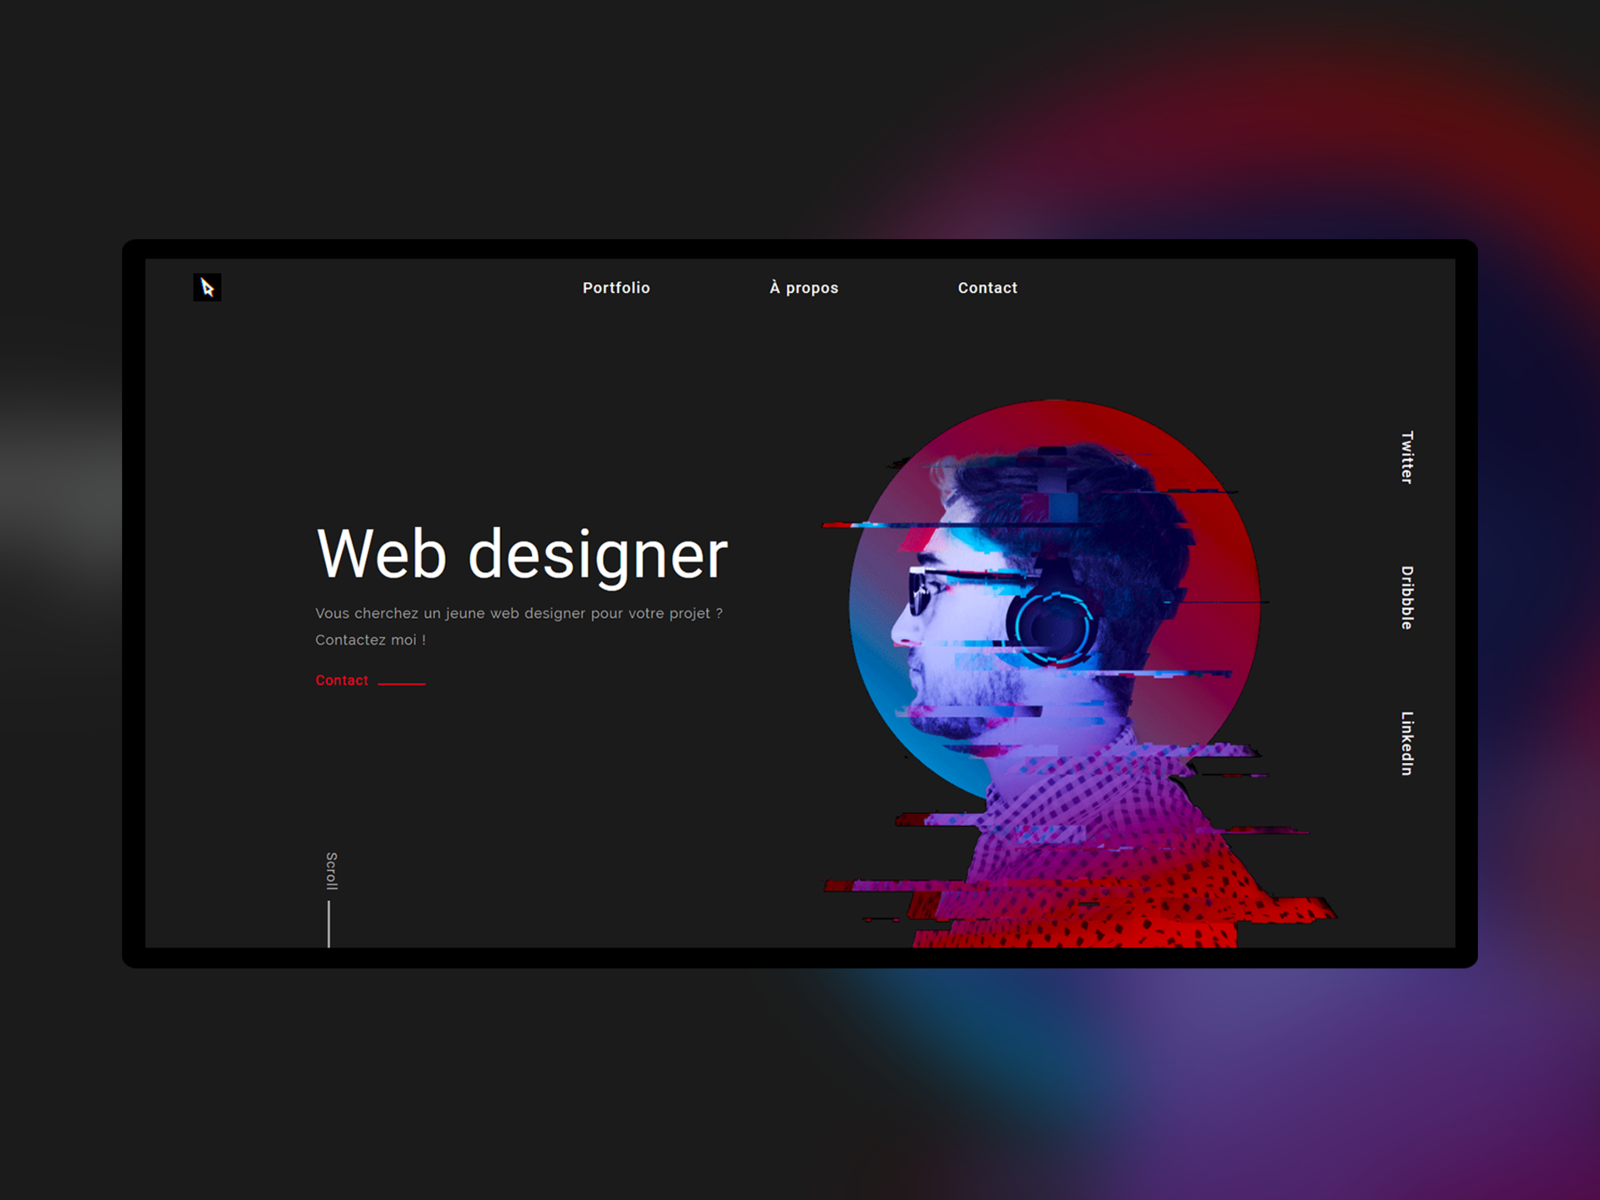 Design inspiration by Mathew | Dribbble